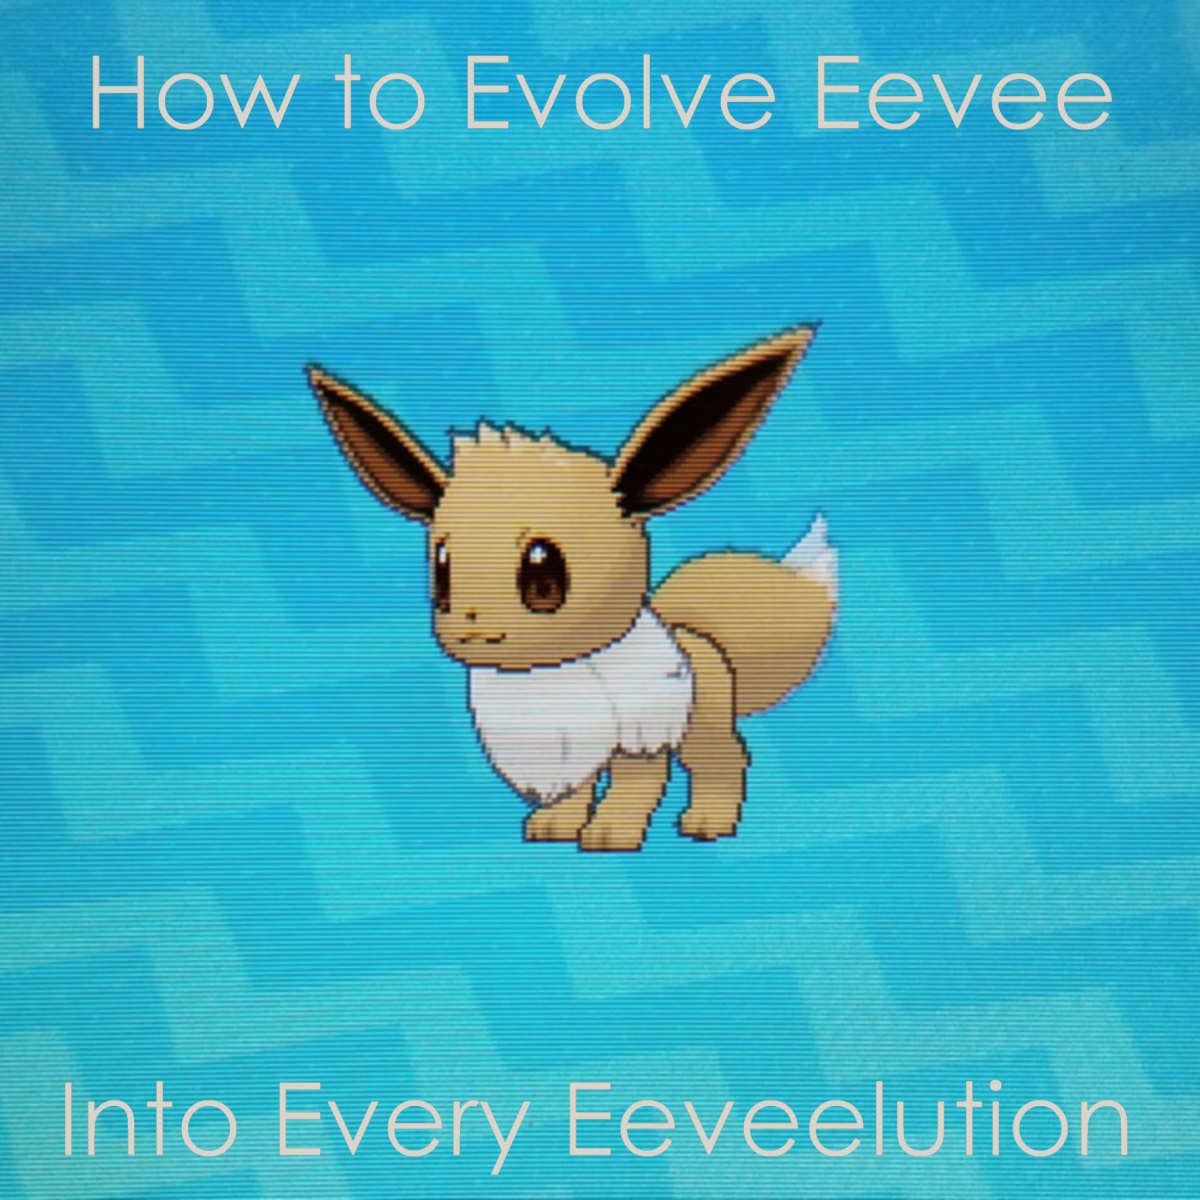 How to Obtain Eeveelutions - Pokemon HeartGold & SoulSilver 